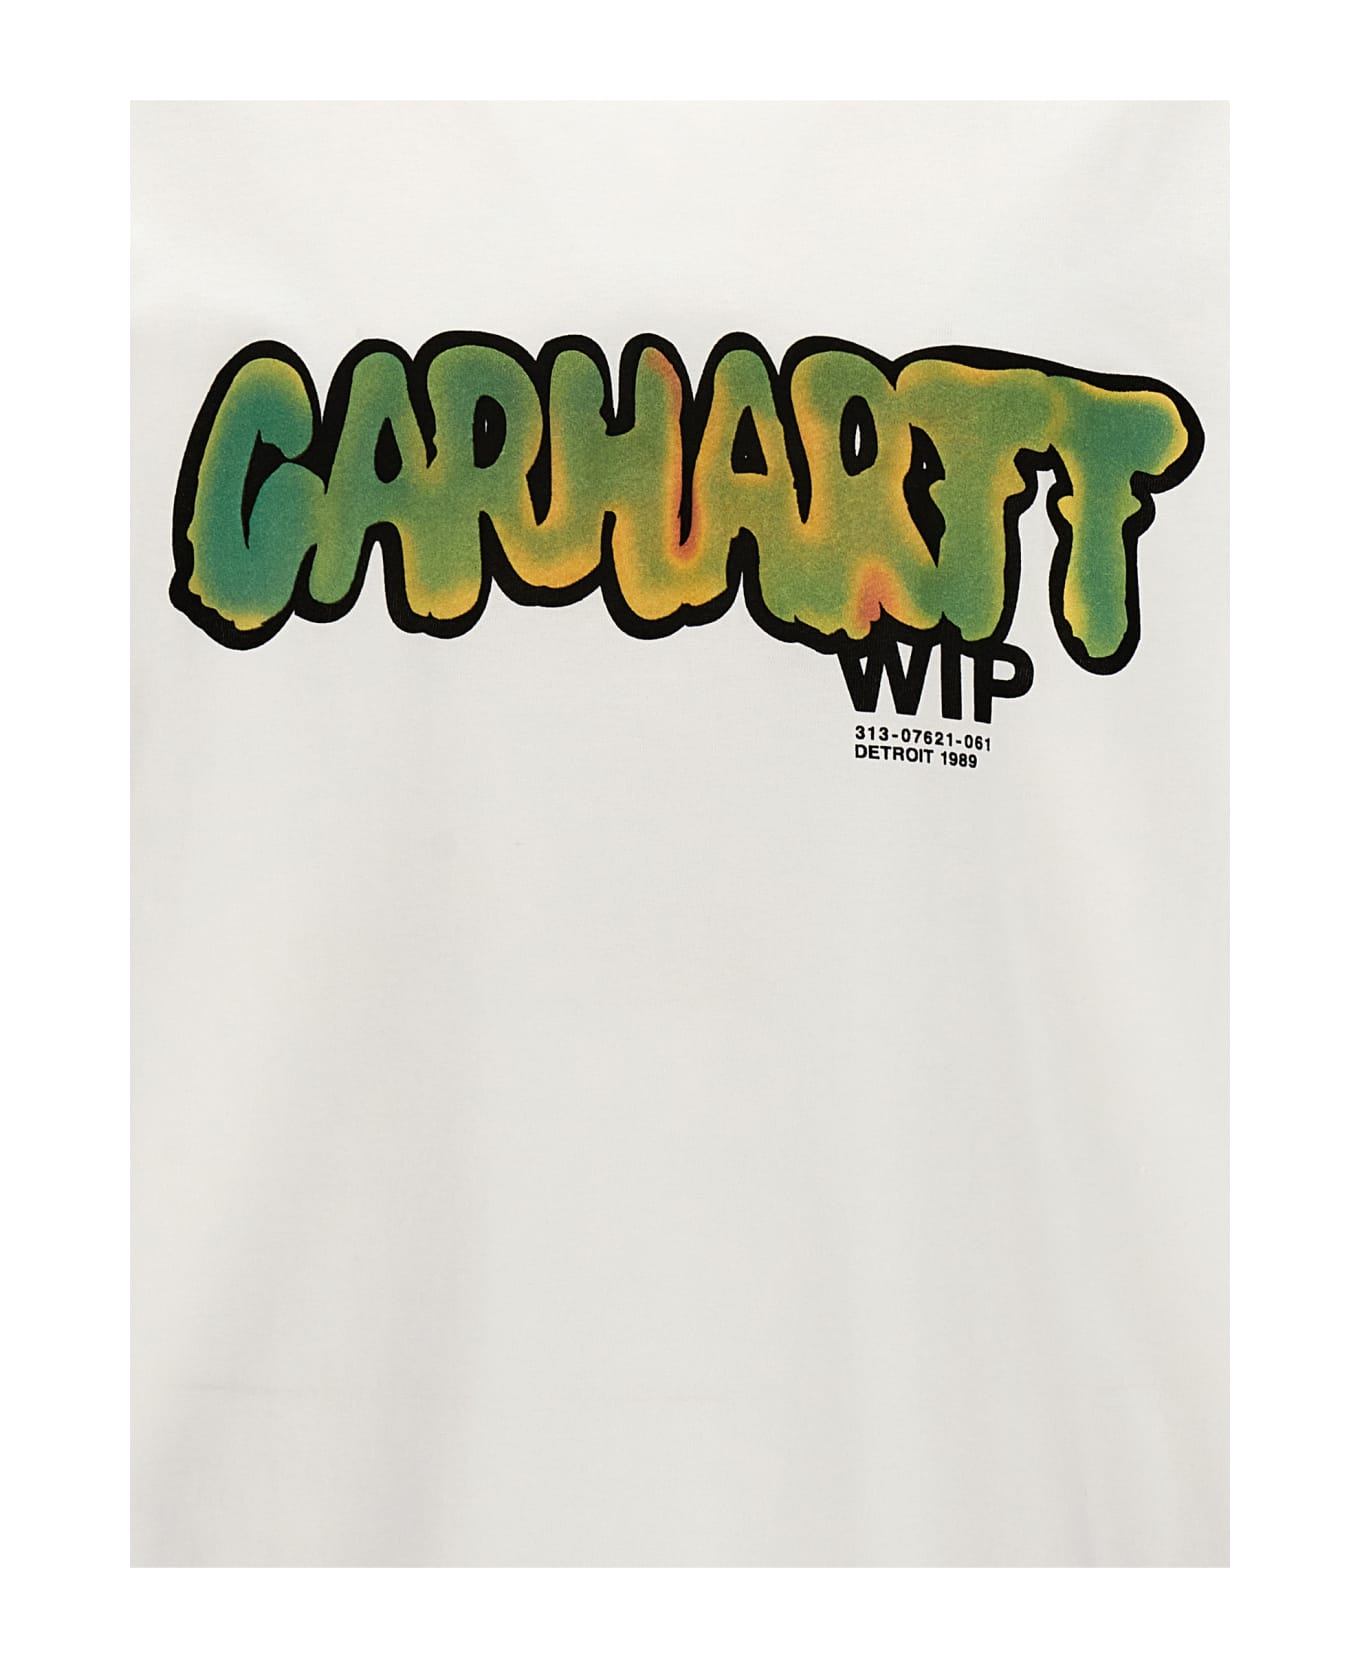 Carhartt 'drip' T-shirt - WHITE シャツ